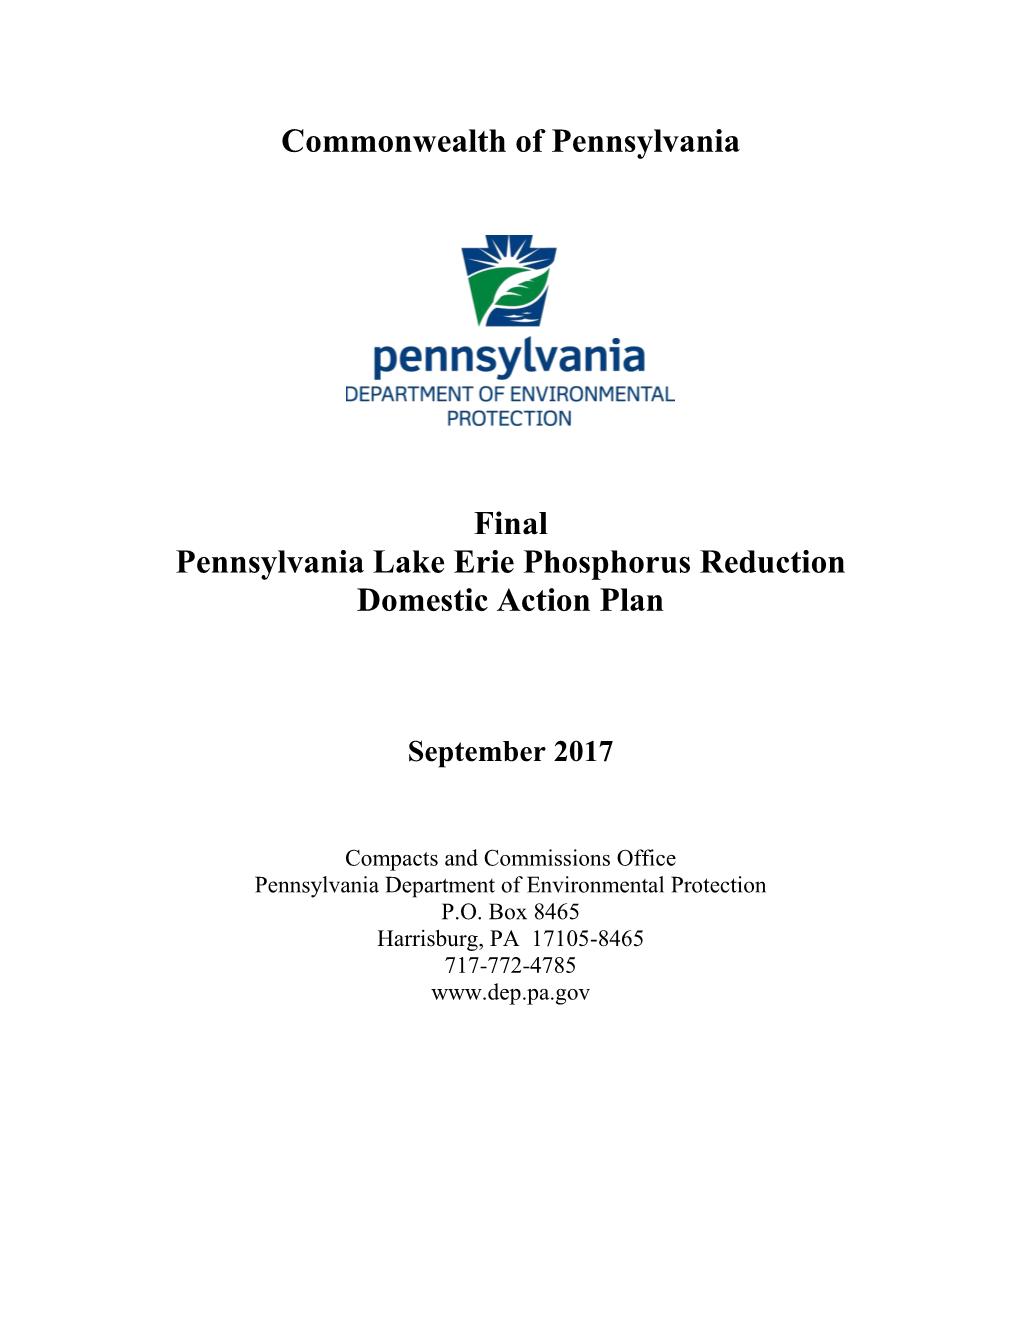 Pennsylvania Lake Erie Phosphorus Reduction Domestic Action Plan